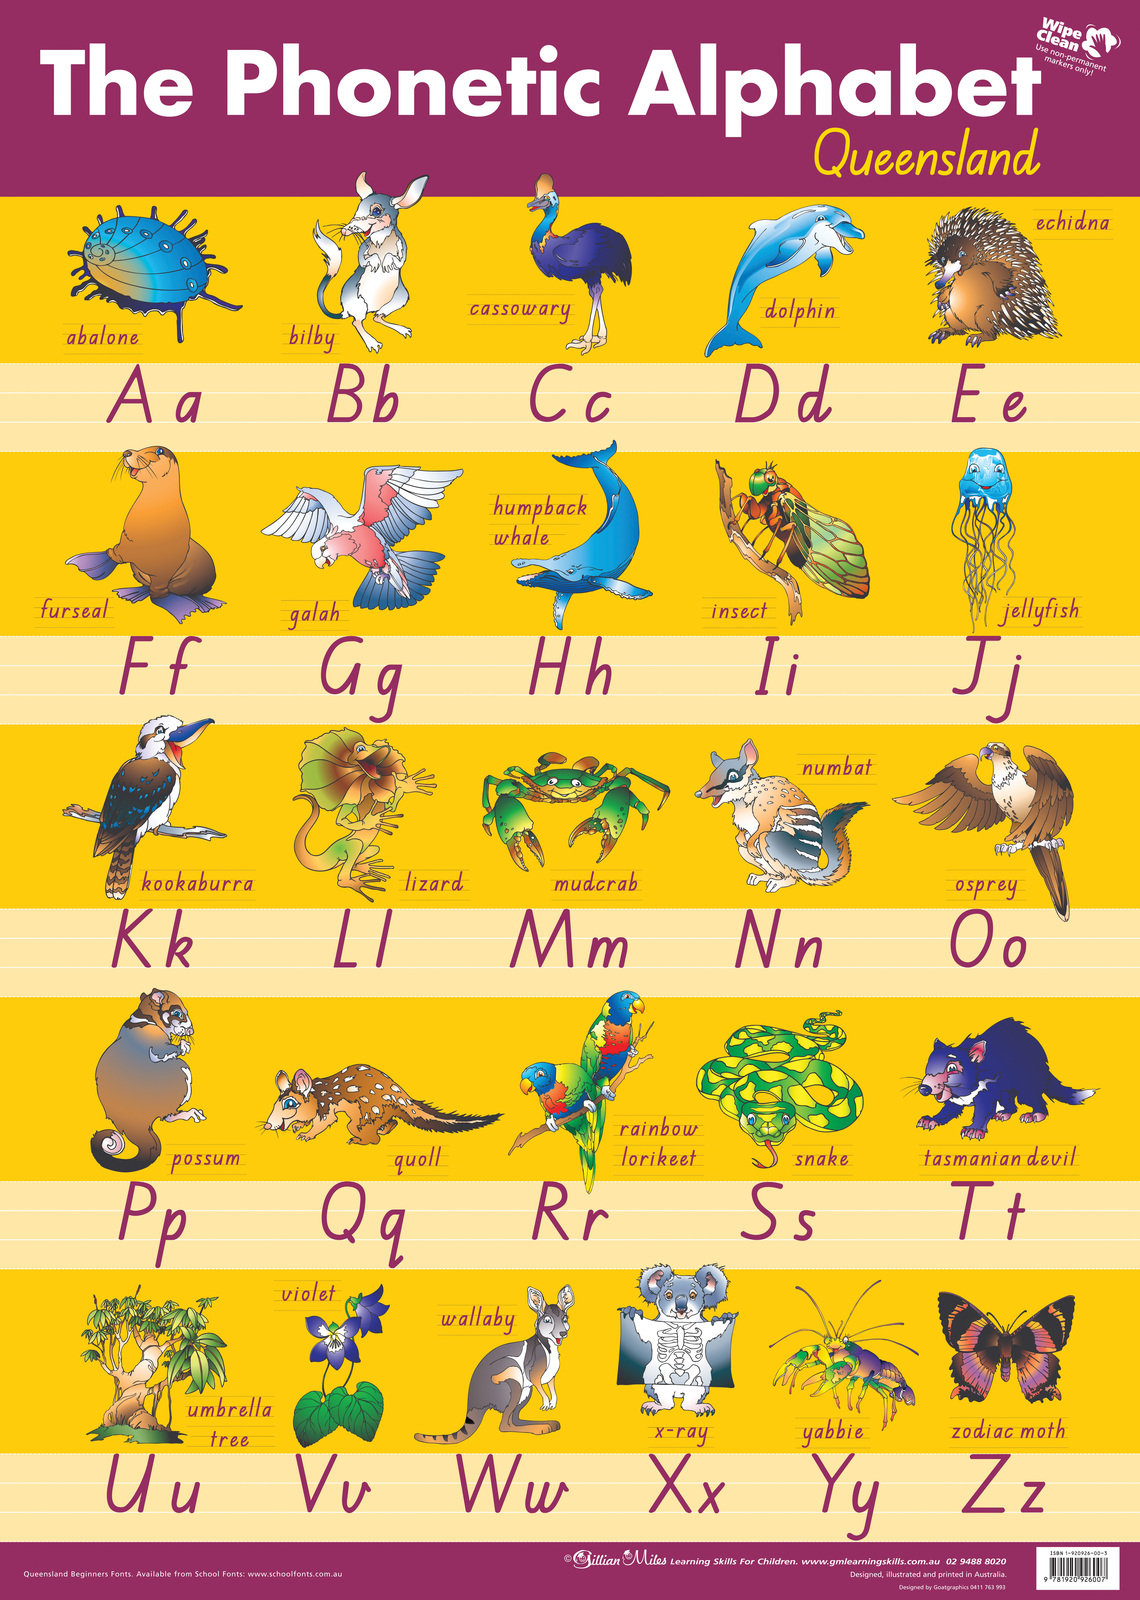 phonetic-alphabet-phonetic-alphabet-chart-queensland-gambaran